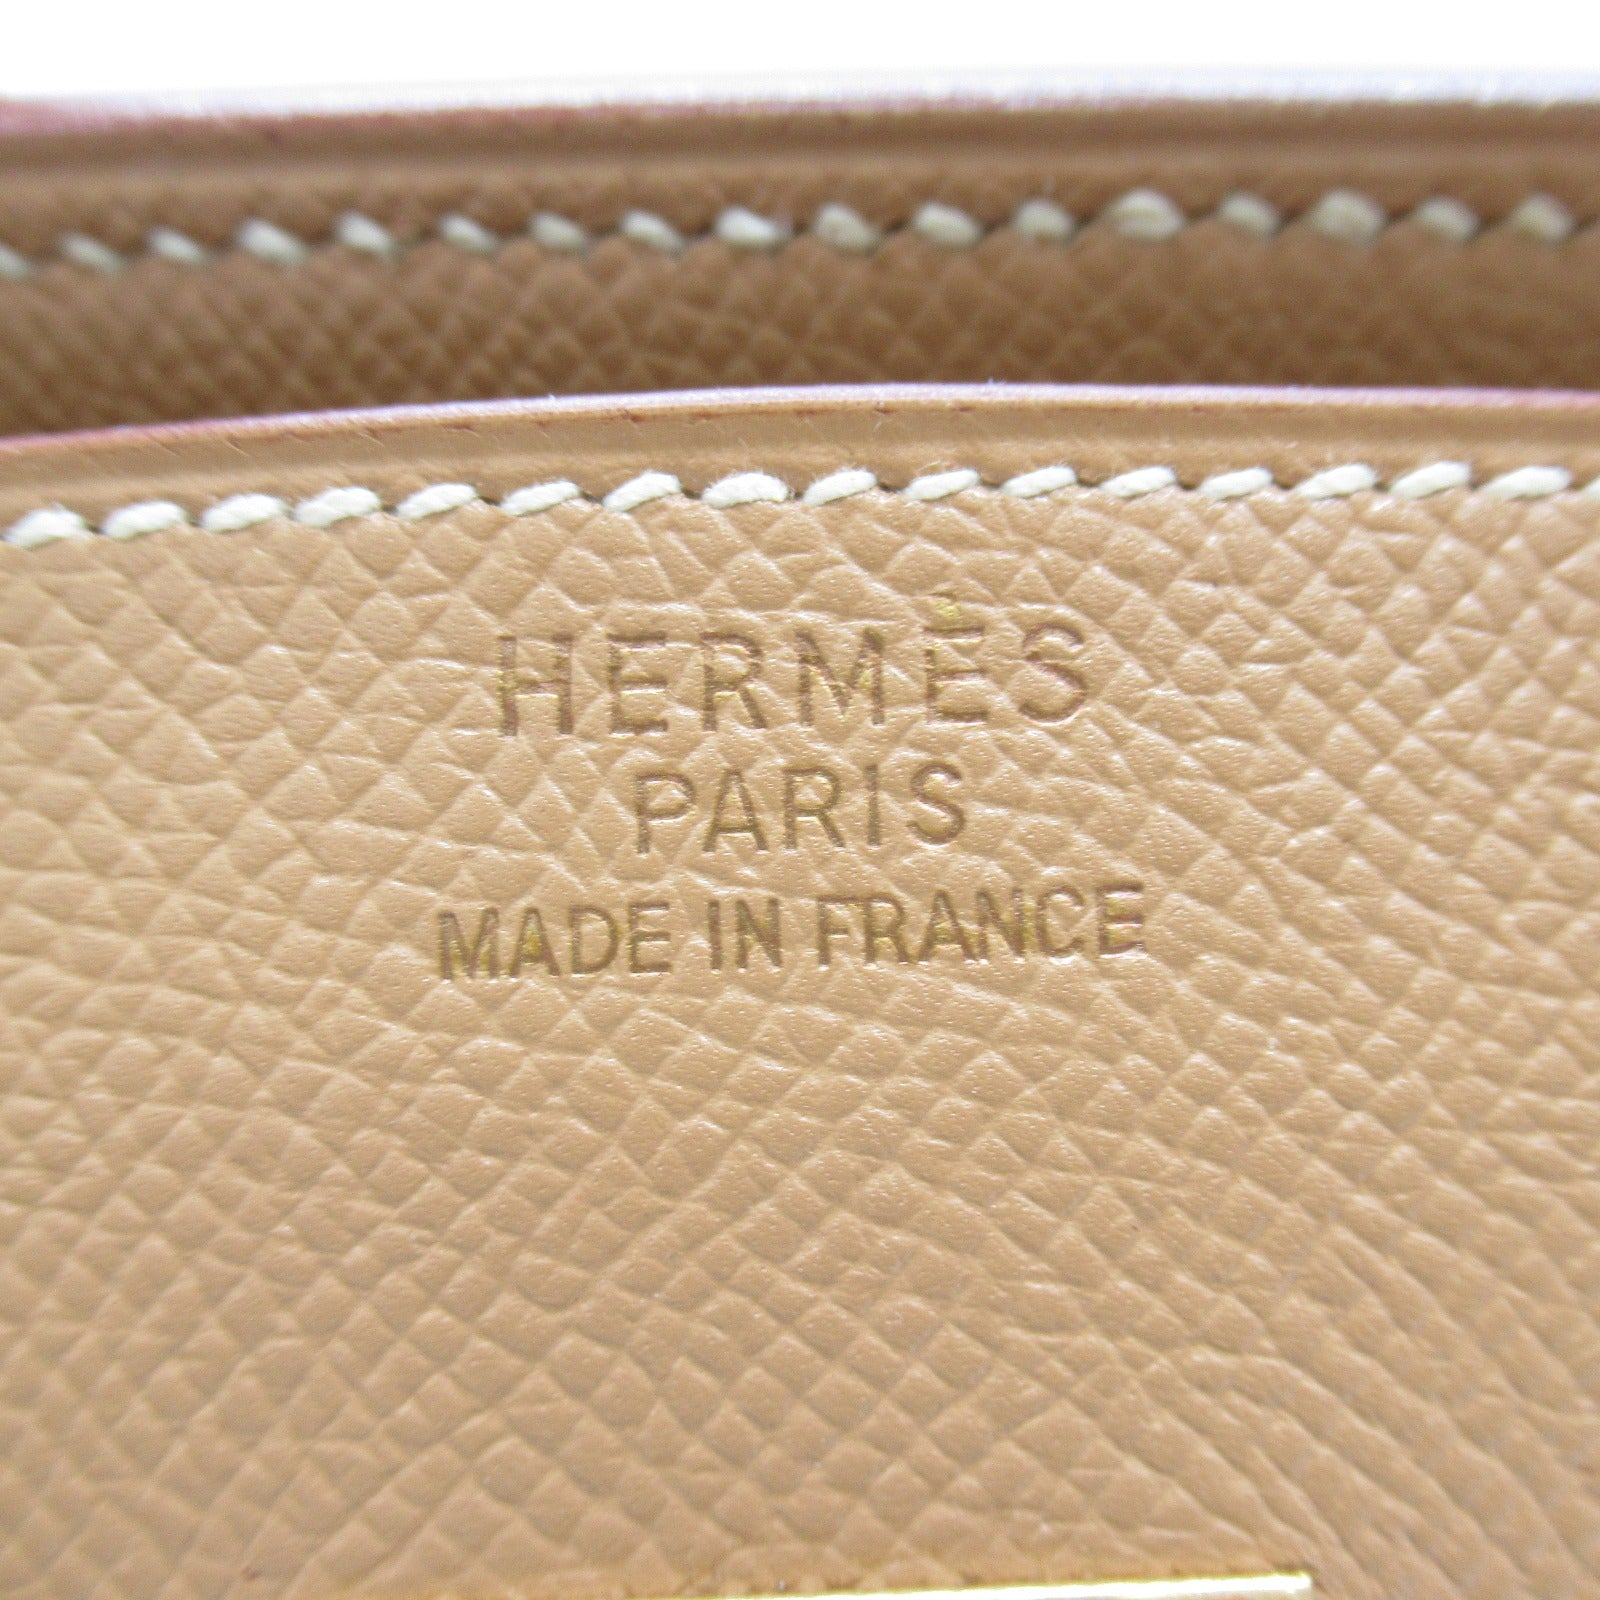 Hermes Hermes Birkin 35 Handbag Handbag Karf  Courchevelly  Beige ing